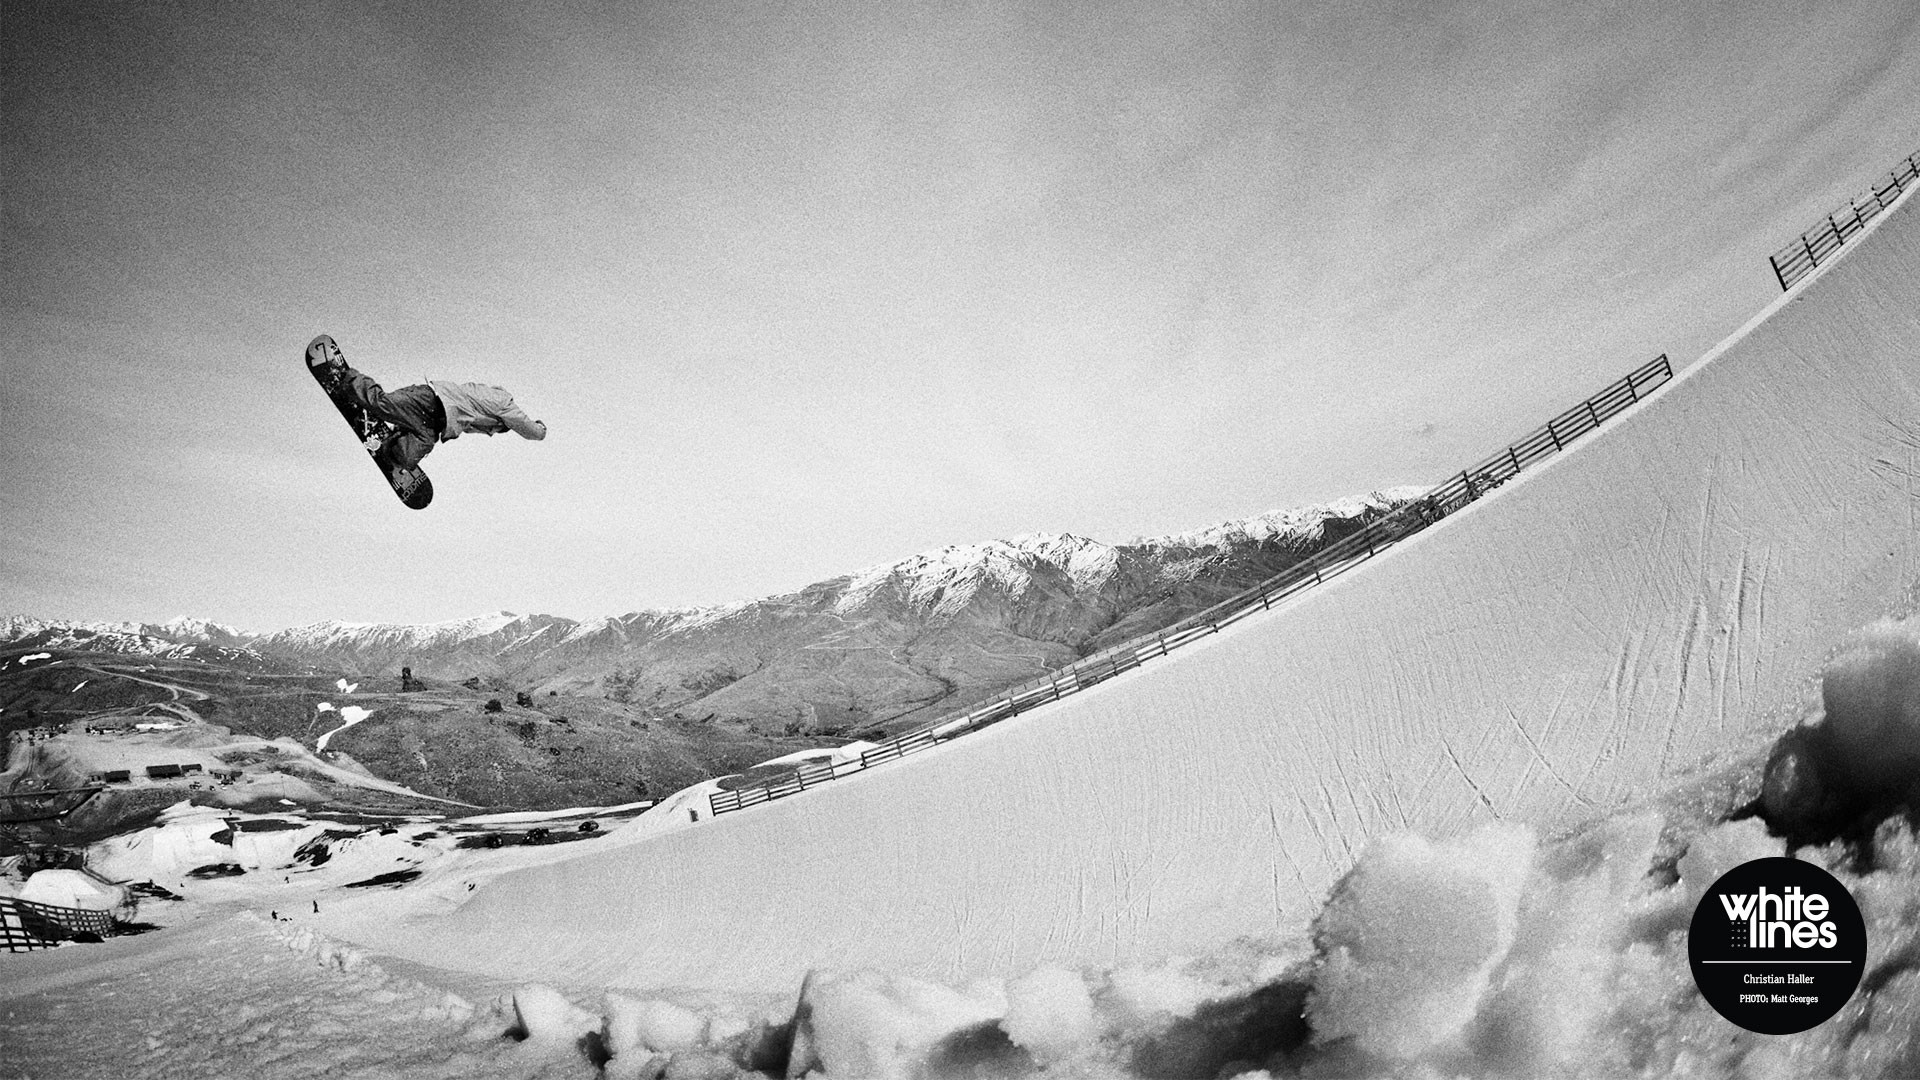 1920x1080 20 sick black and white snowboard shots